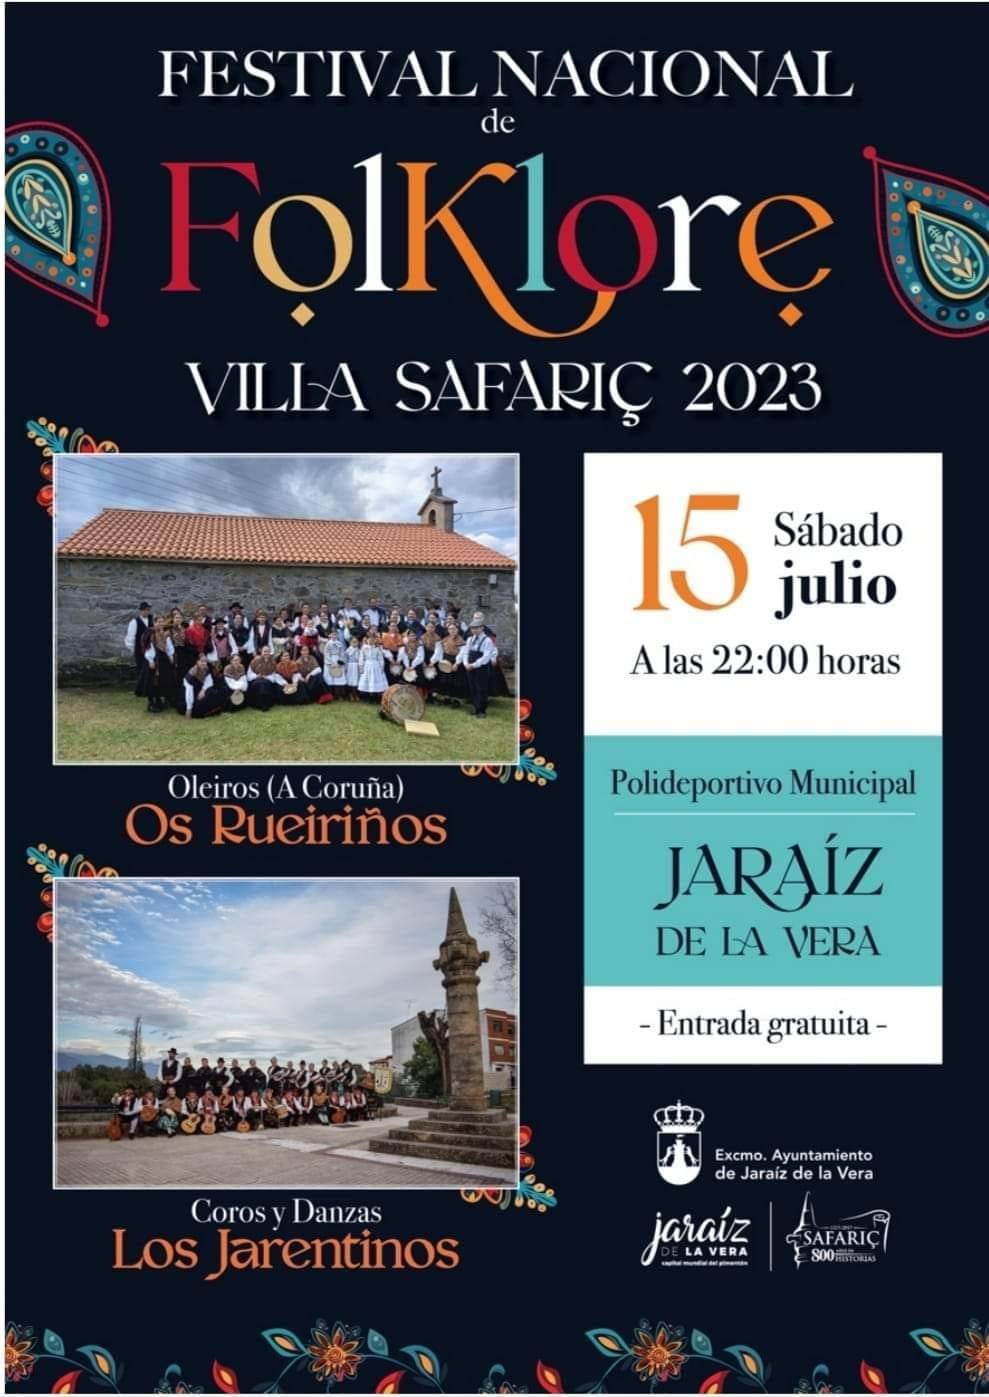 Festival Nacional de Folklore 'Villa Safariç' (2023) - Jaraíz de la Vera (Cáceres)